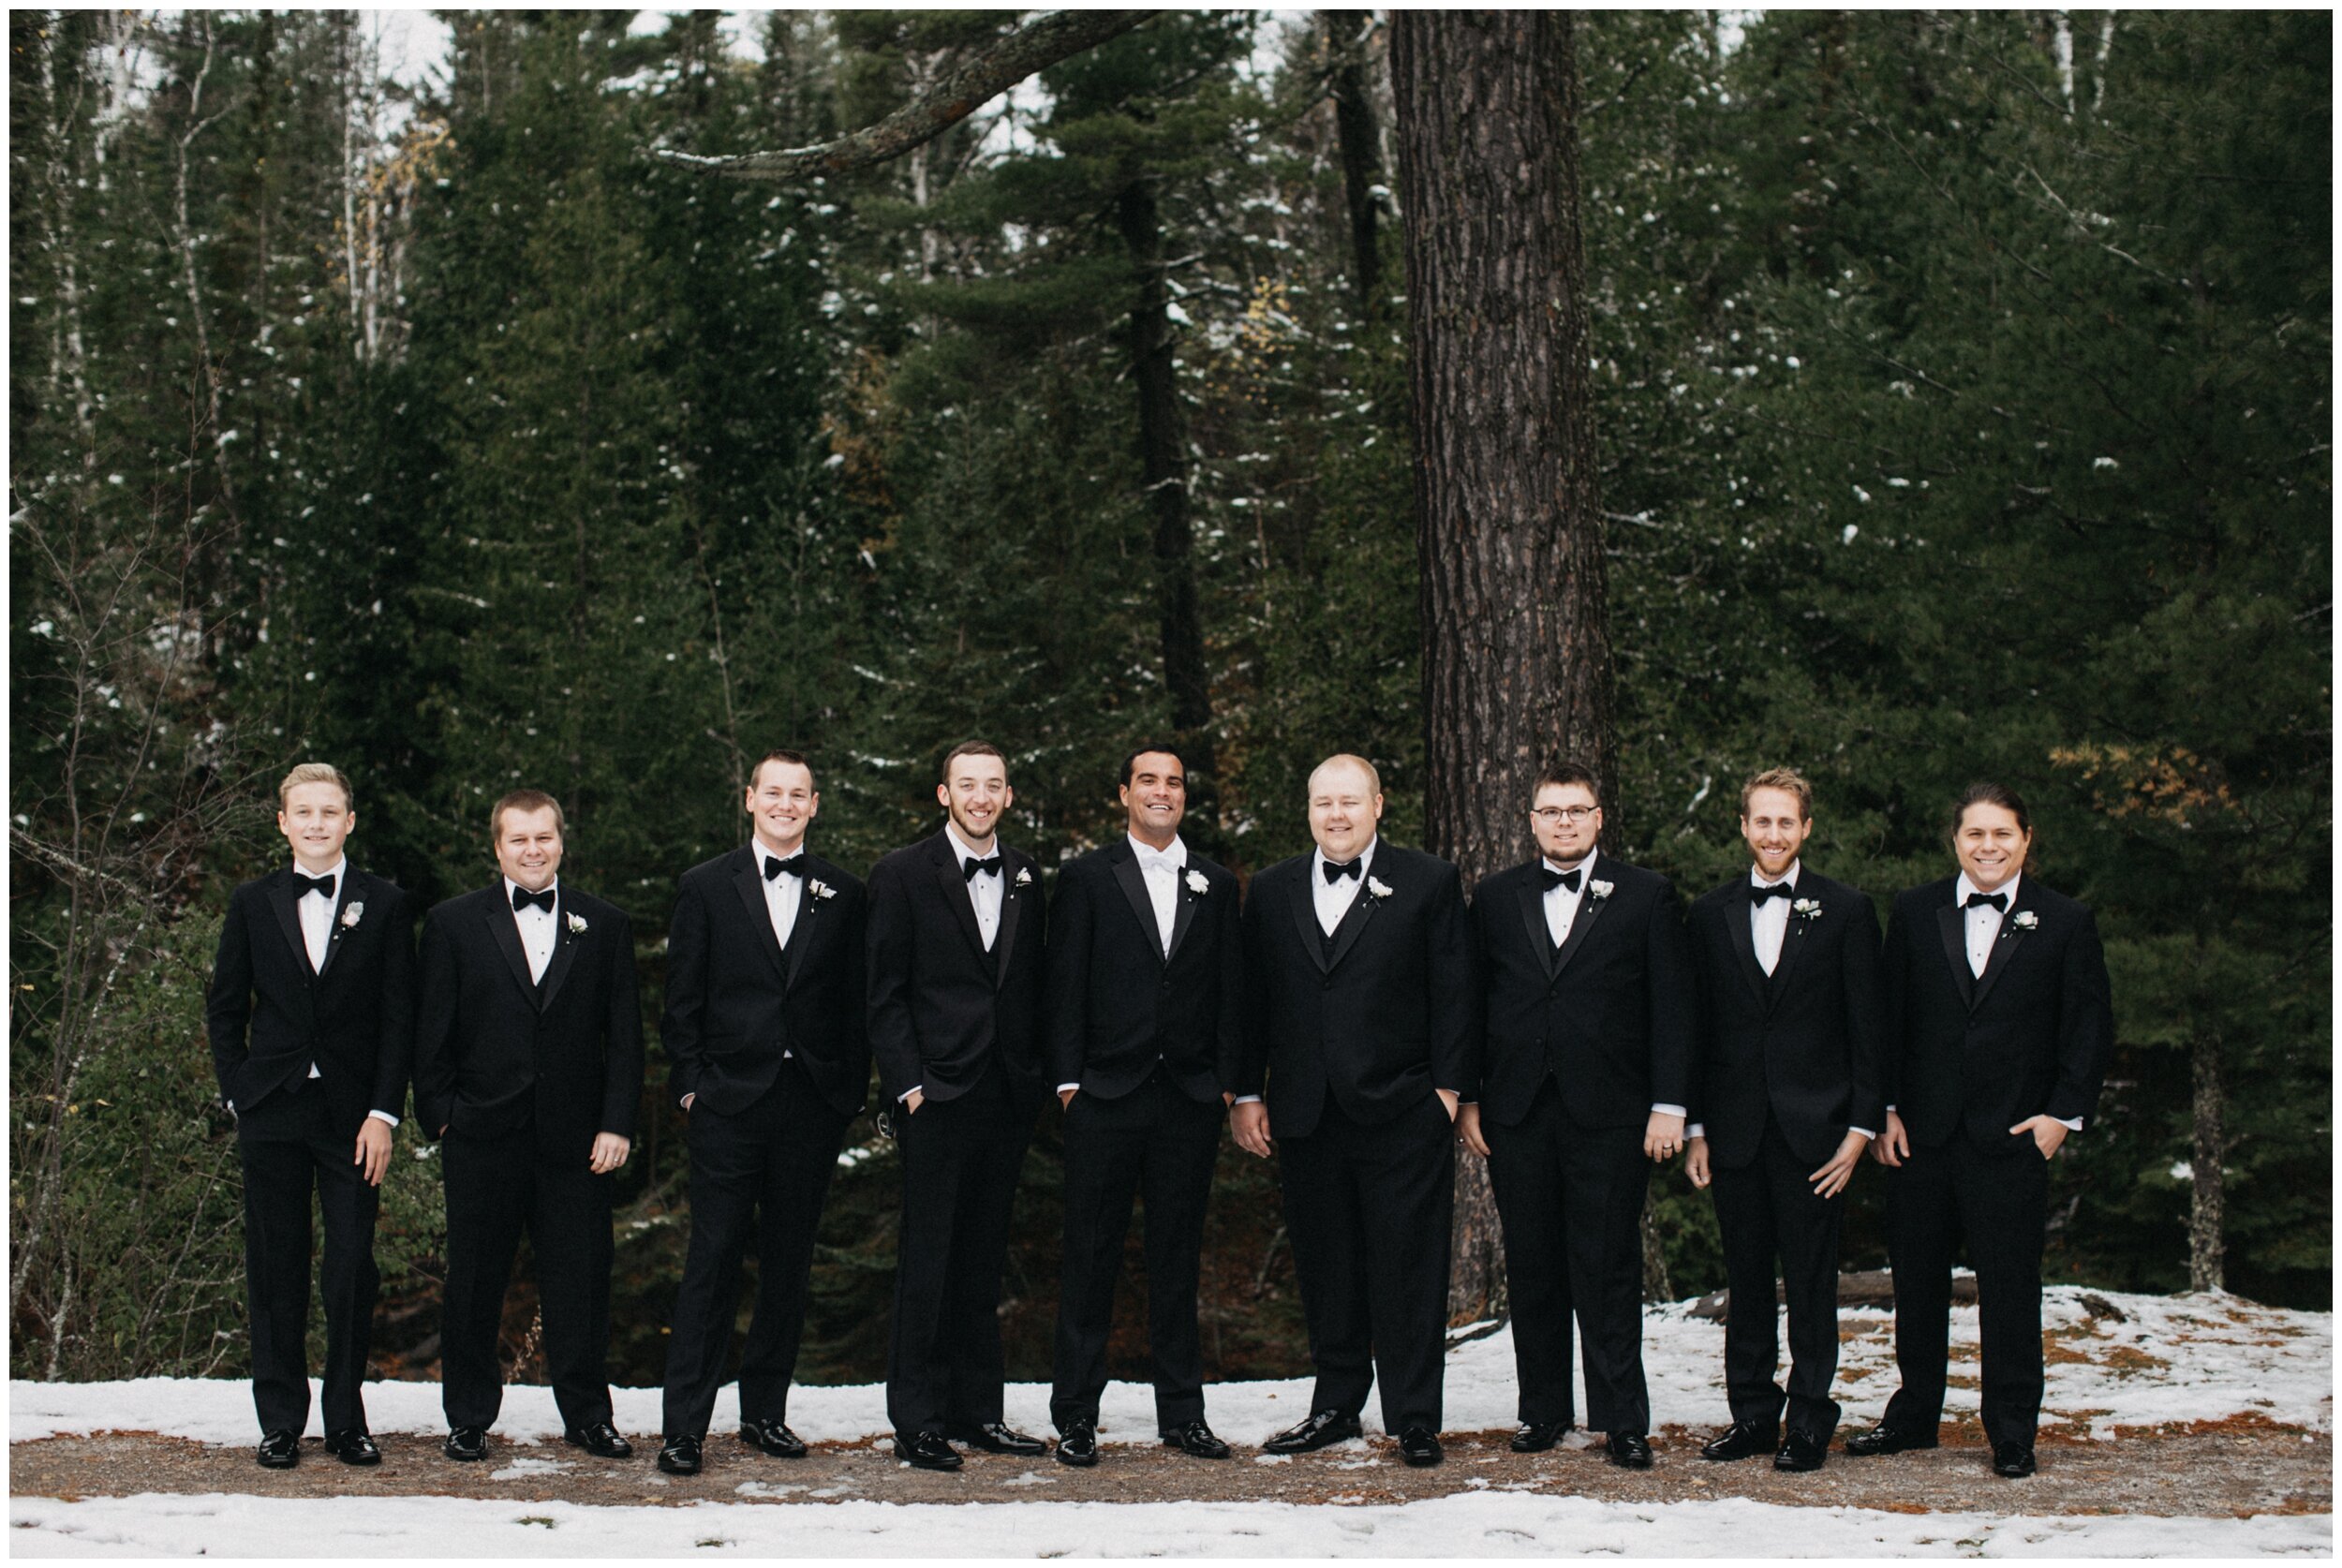 Groom and groomsmen wearing classy black tie tuxedos in Lester Park